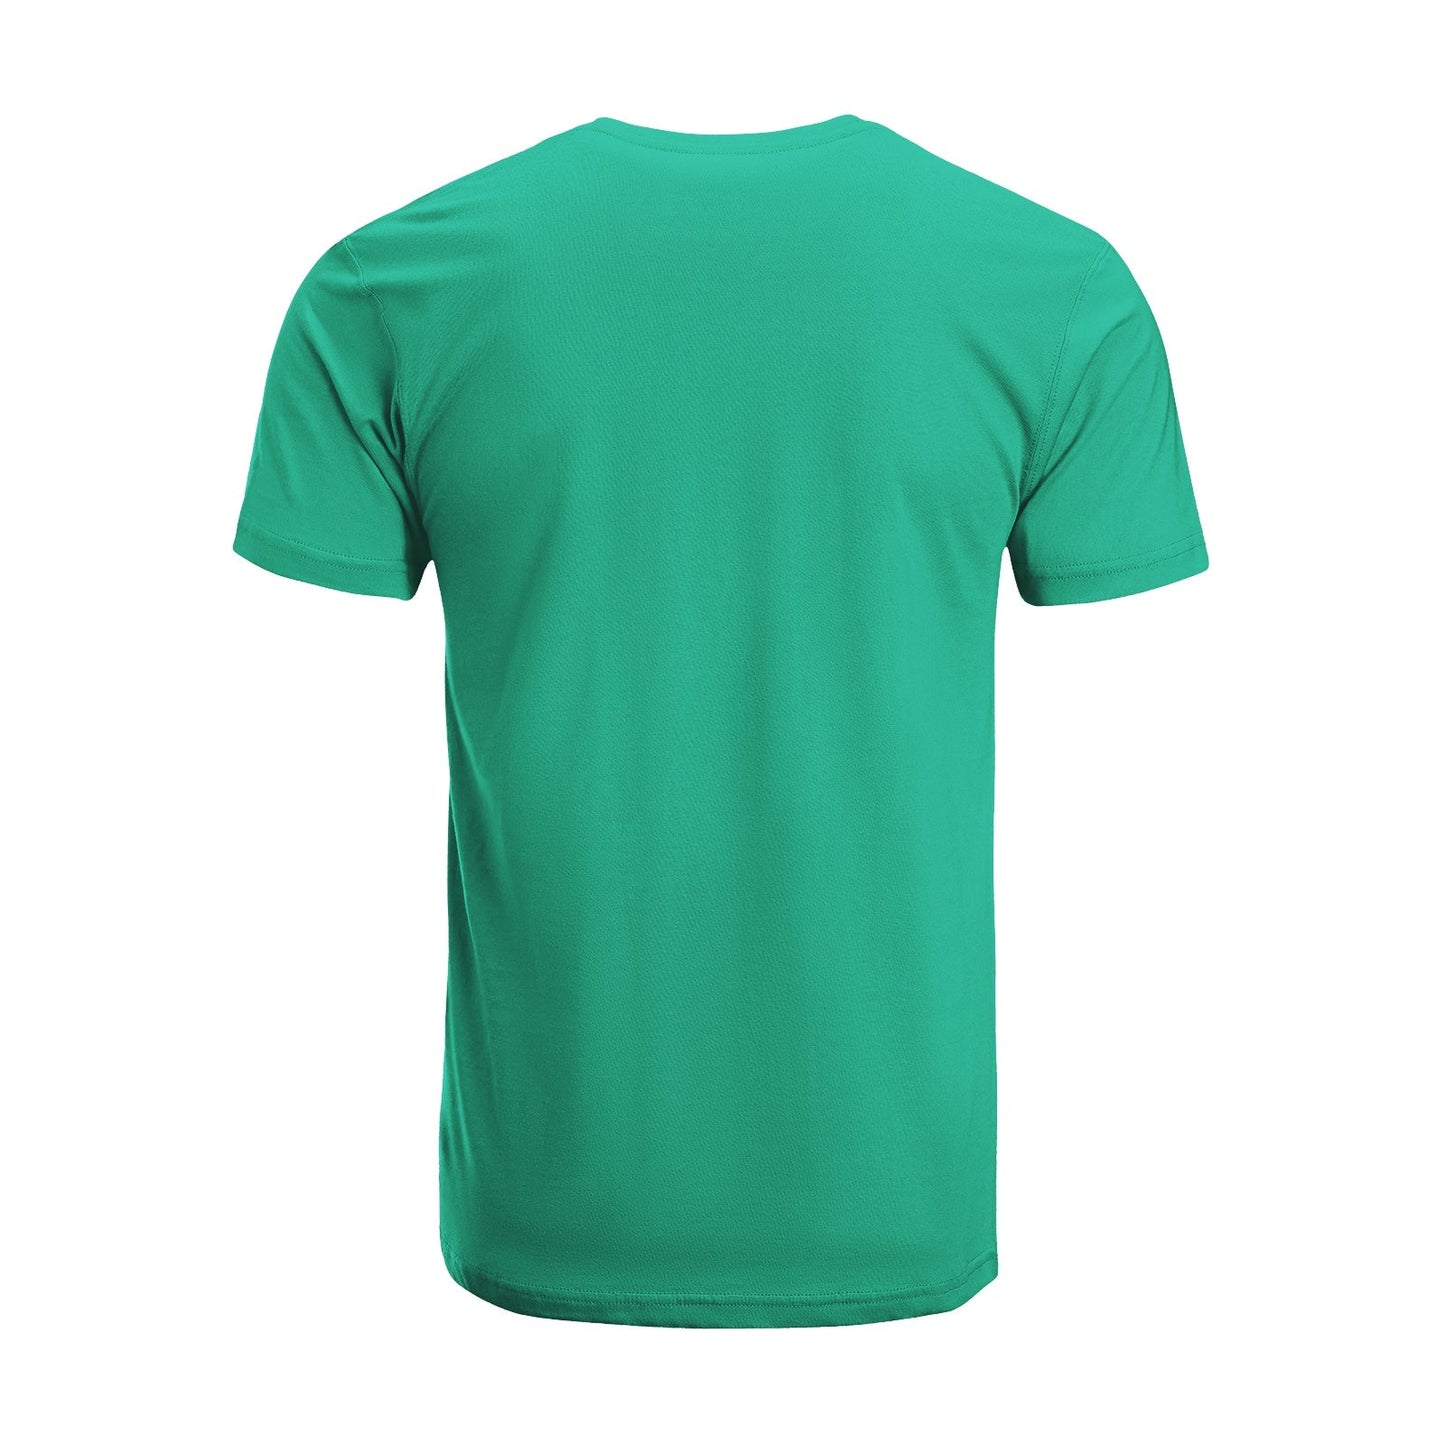 Unisex Short Sleeve Crew Neck Cotton Jersey T-Shirt MOM 47